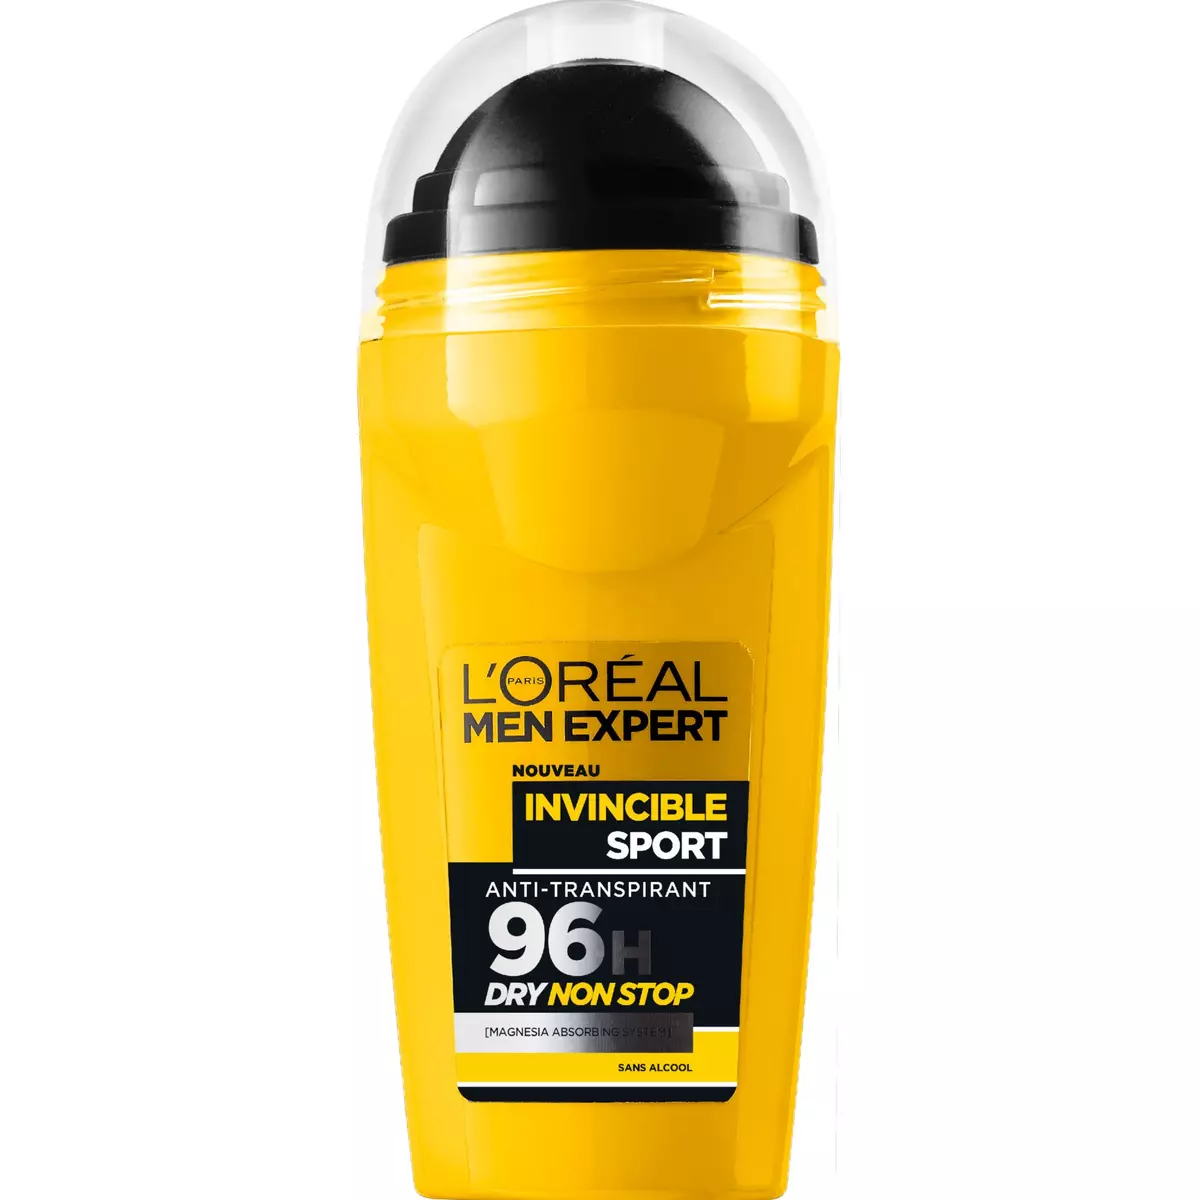 L'OREAL Men Expert invincible sport déodorant bille 96h anti-transpirant 50ml